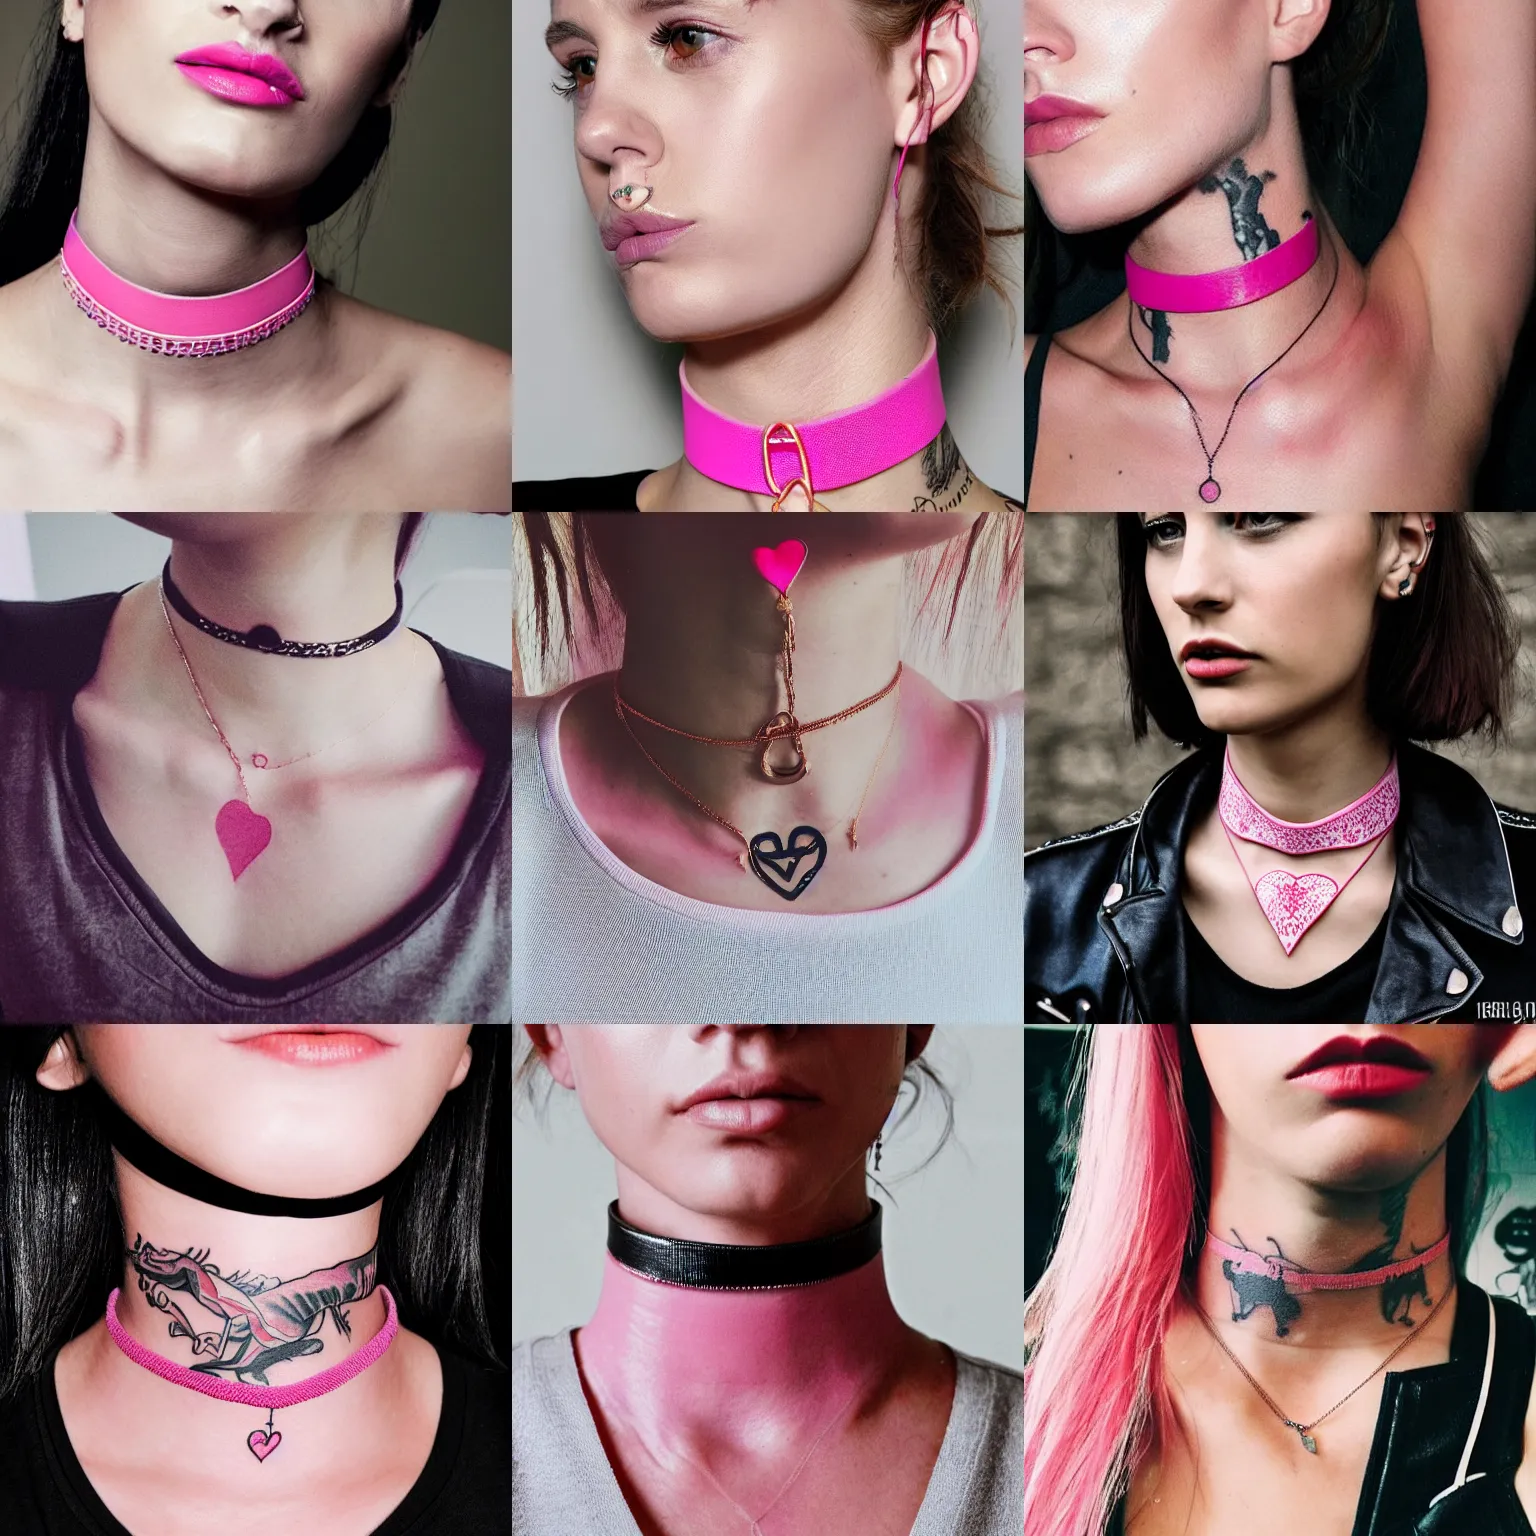 Prompt: straight neck, pink choker, tattoos